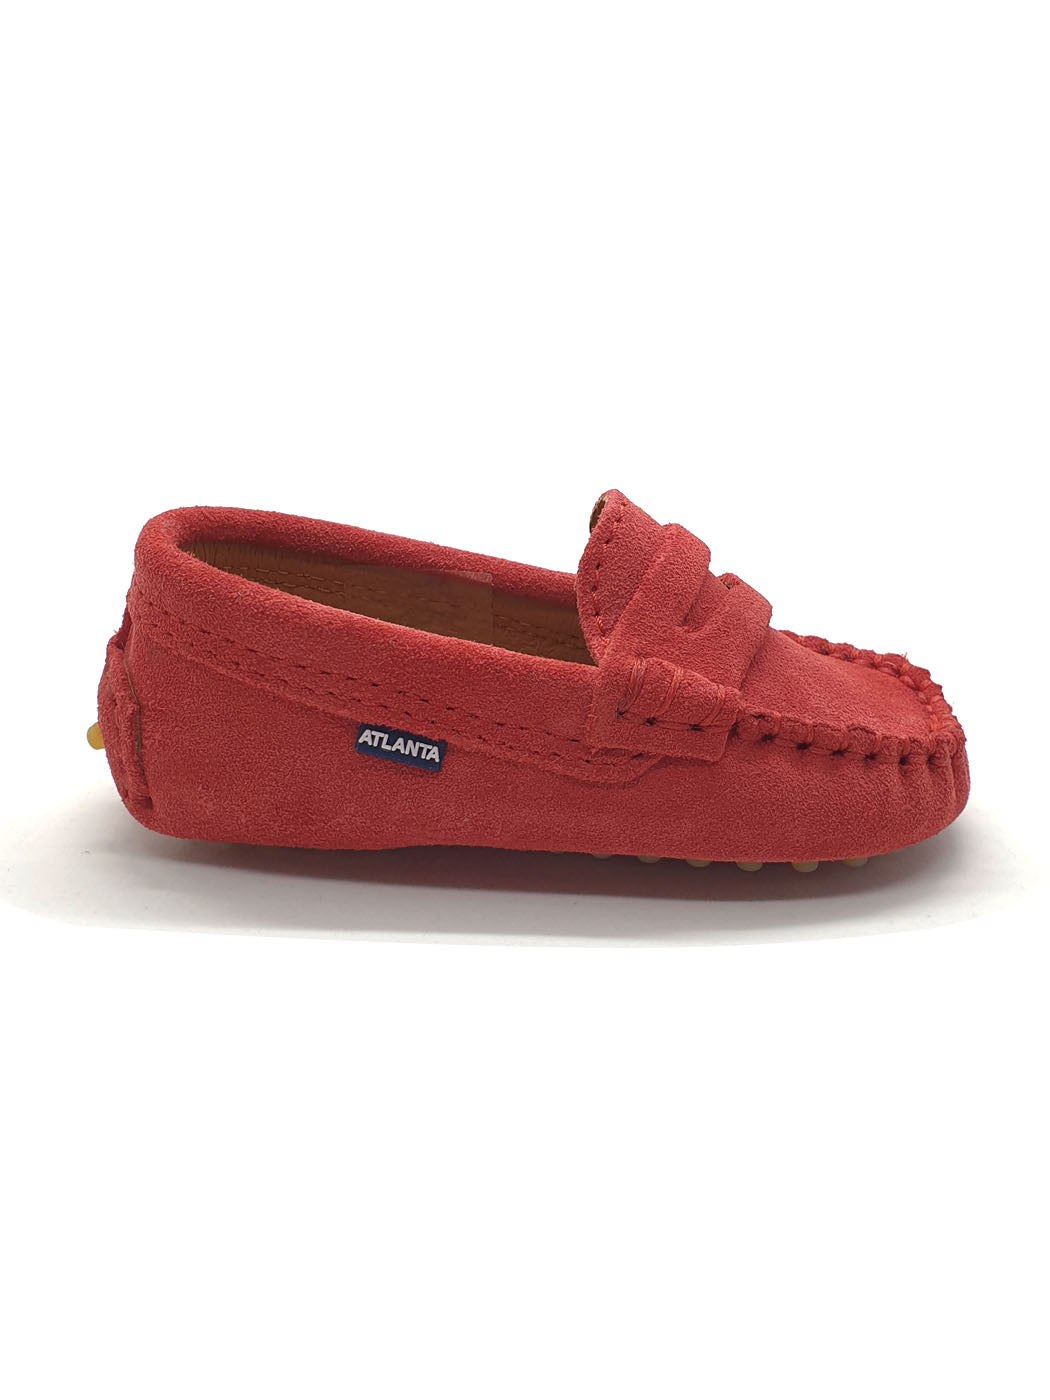 Atlanta Mocassin- Baby Shoes Moccasins Red-002G022